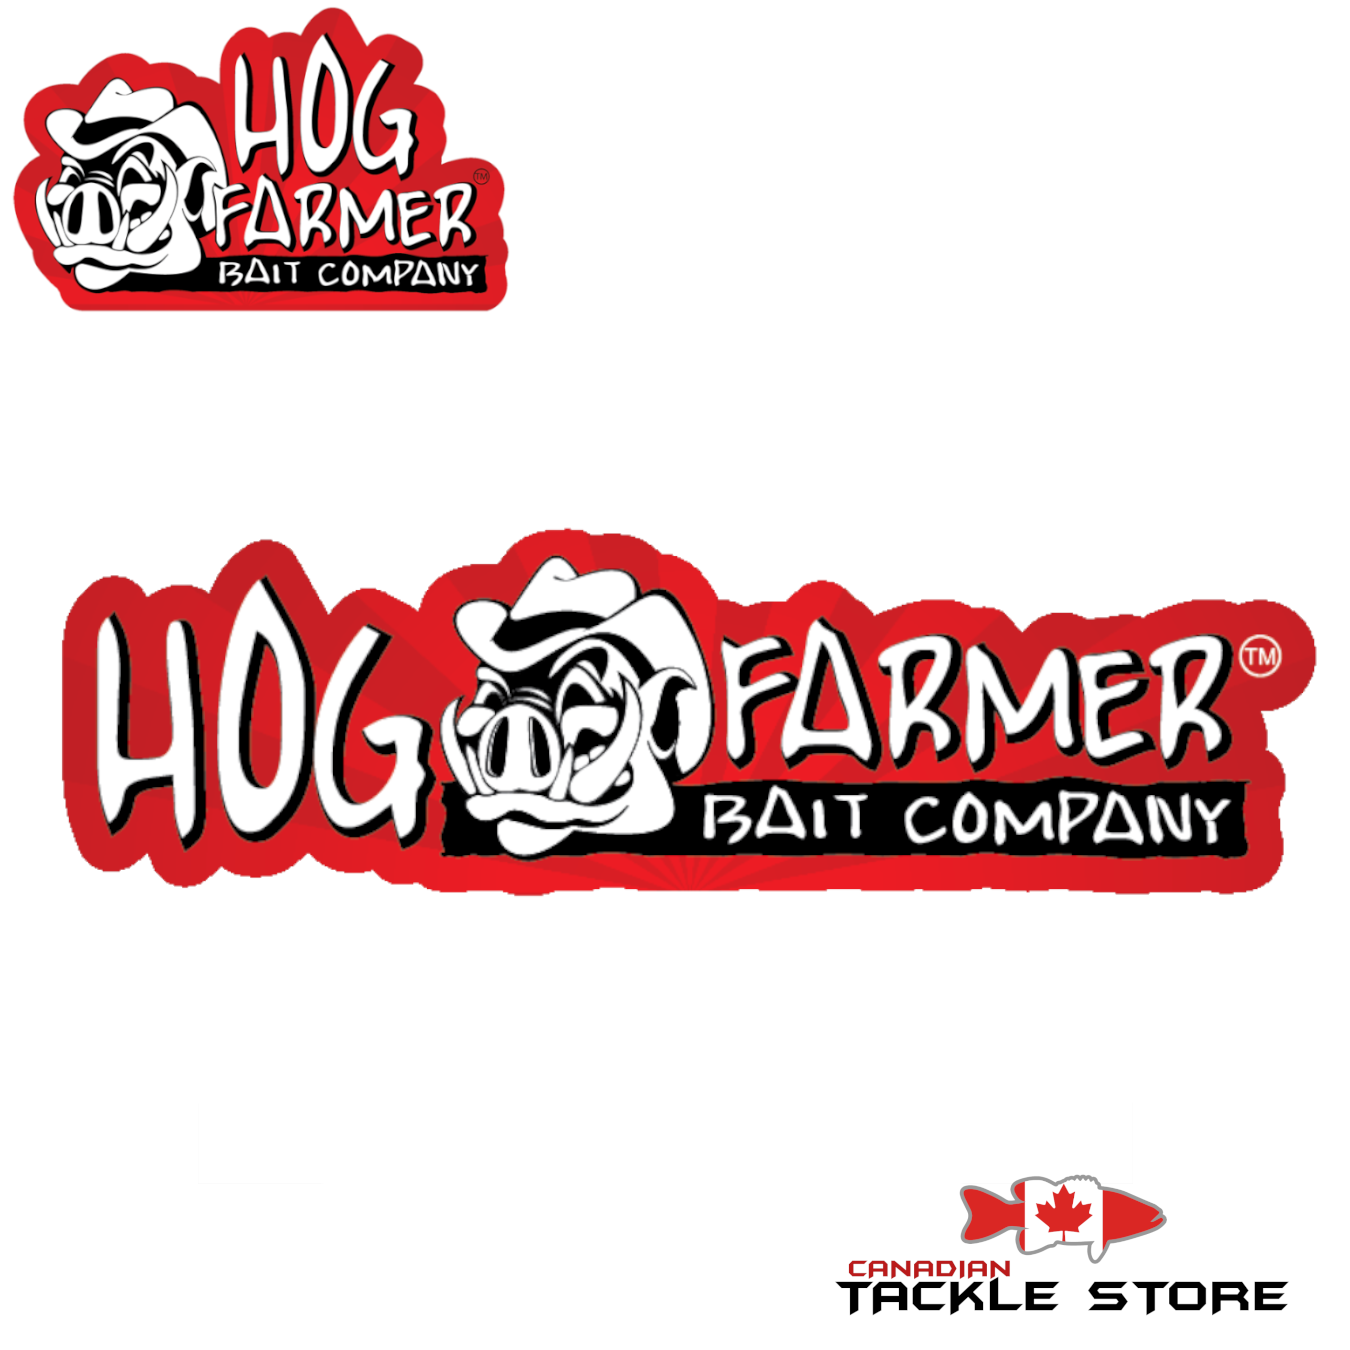 Hog Farmer – Canadian Tackle Store